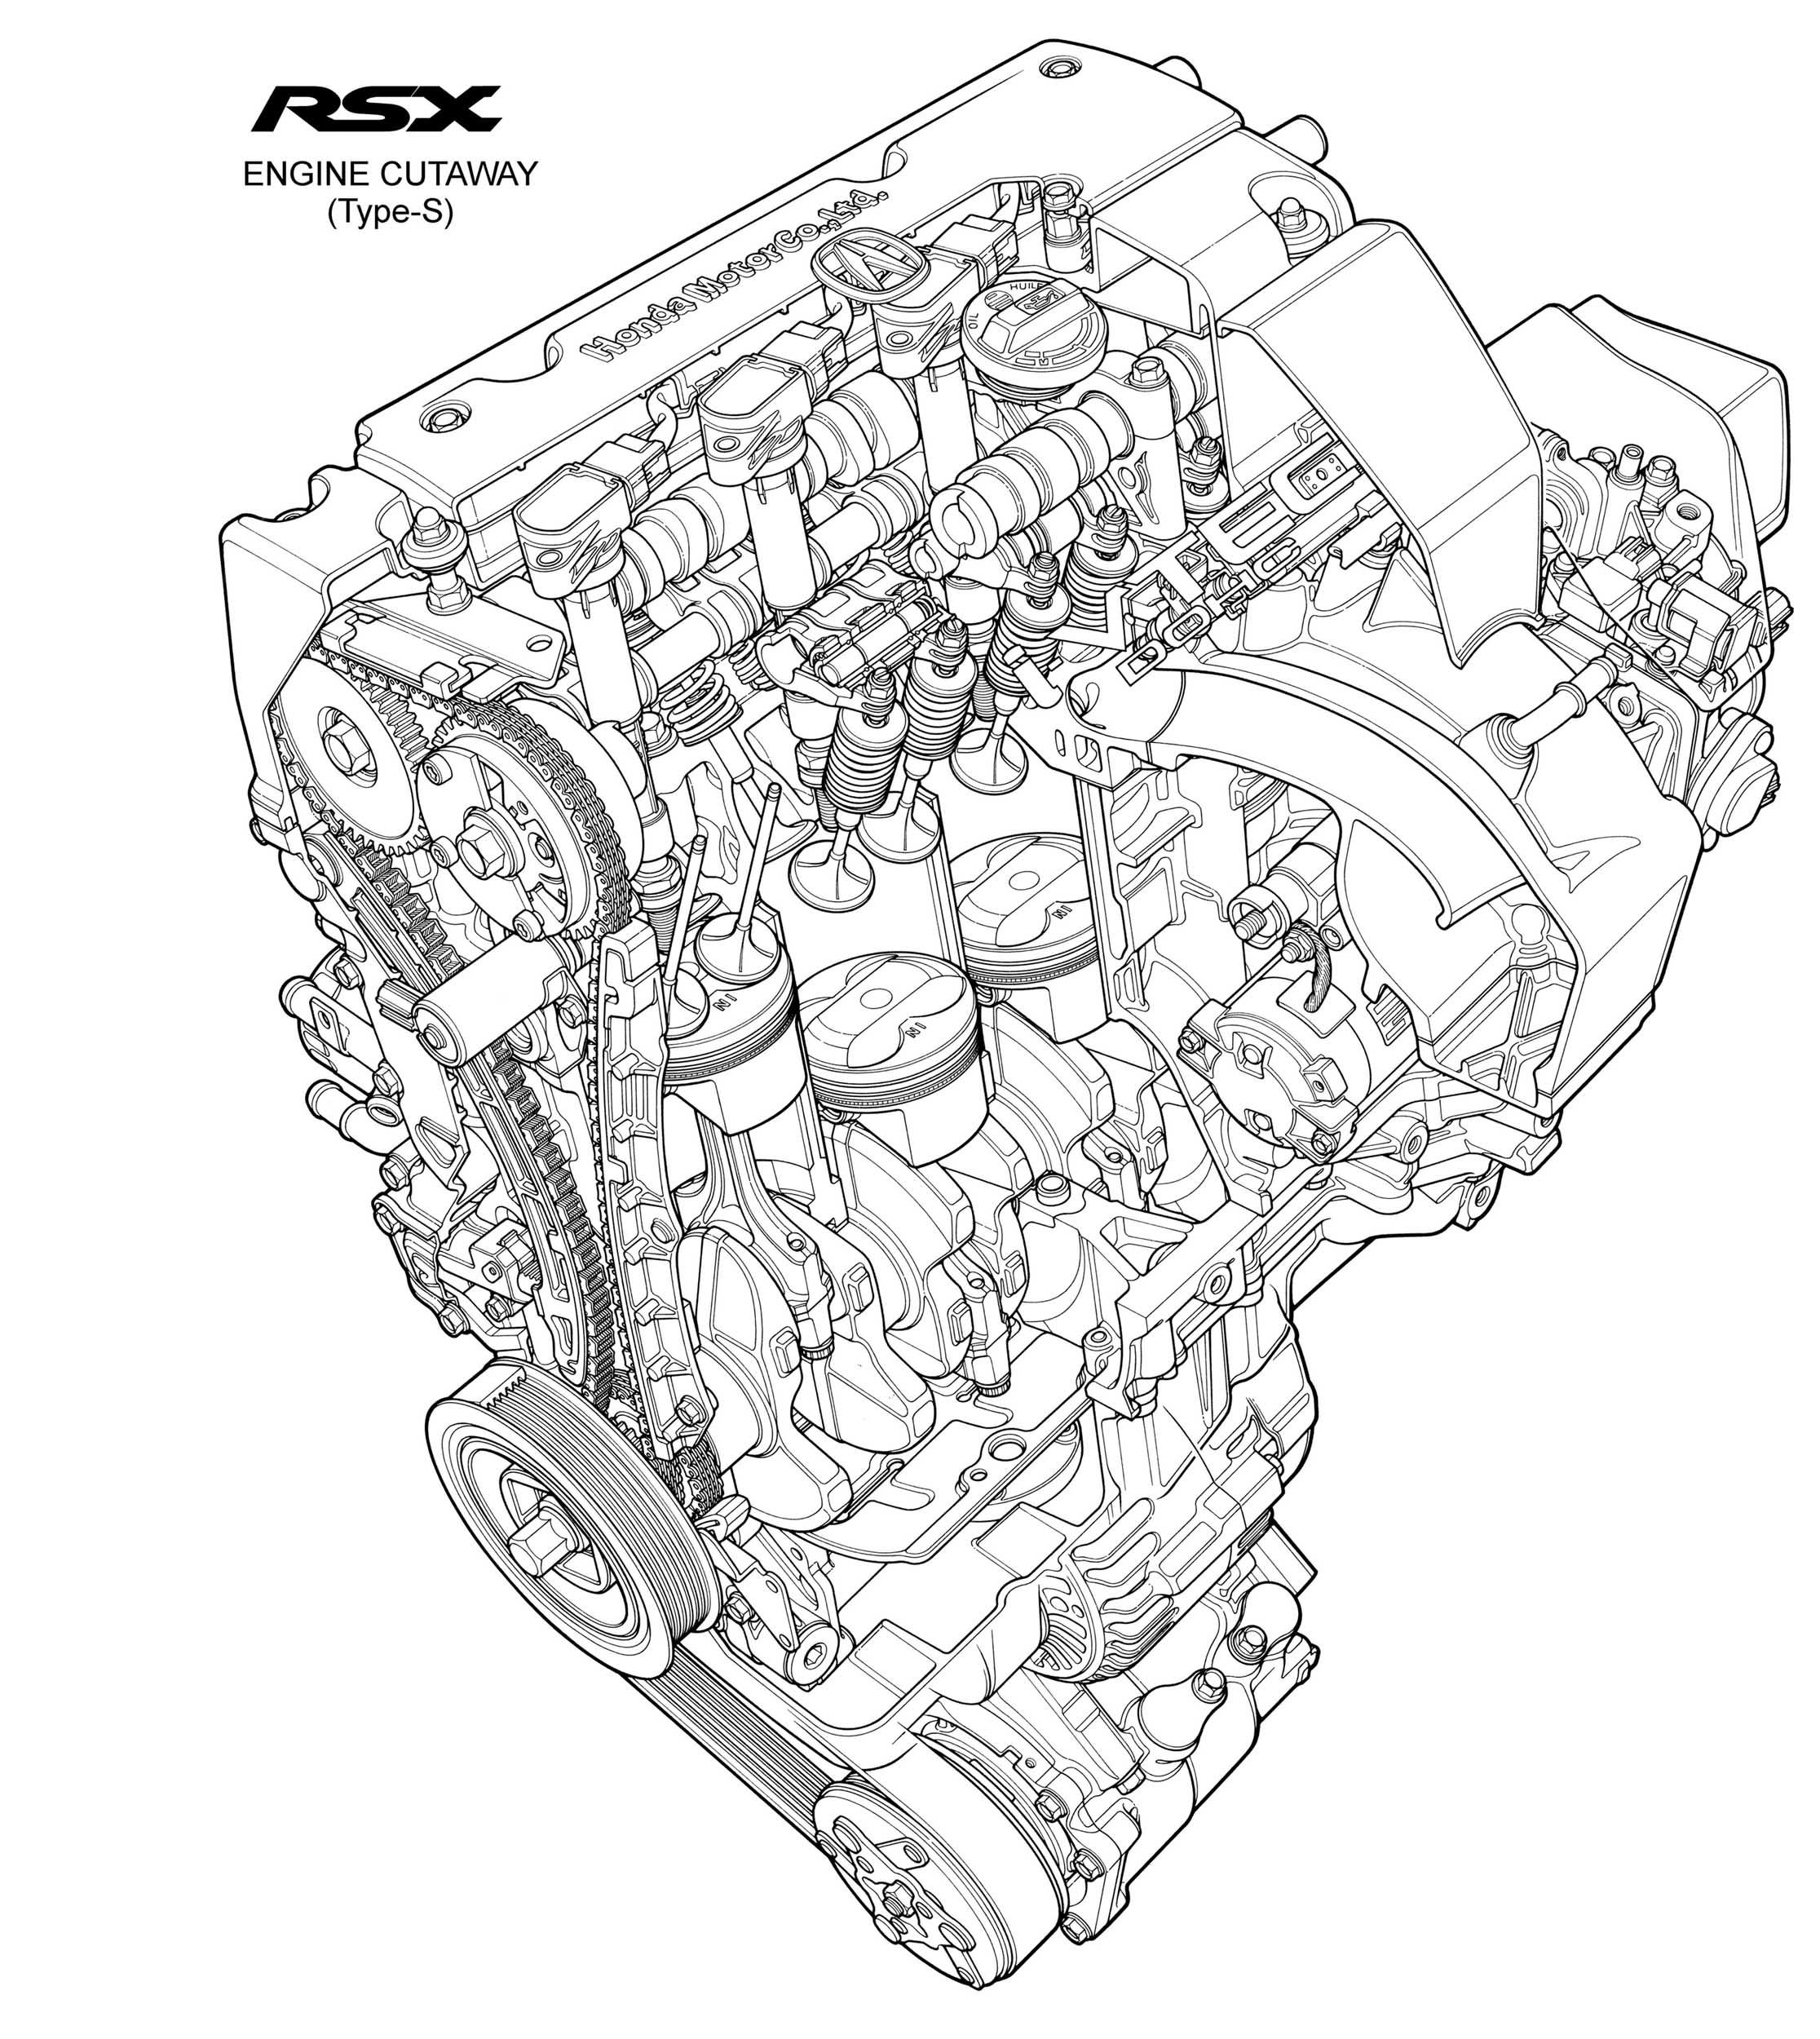 Acura Rsx Type S Engine Cutaway